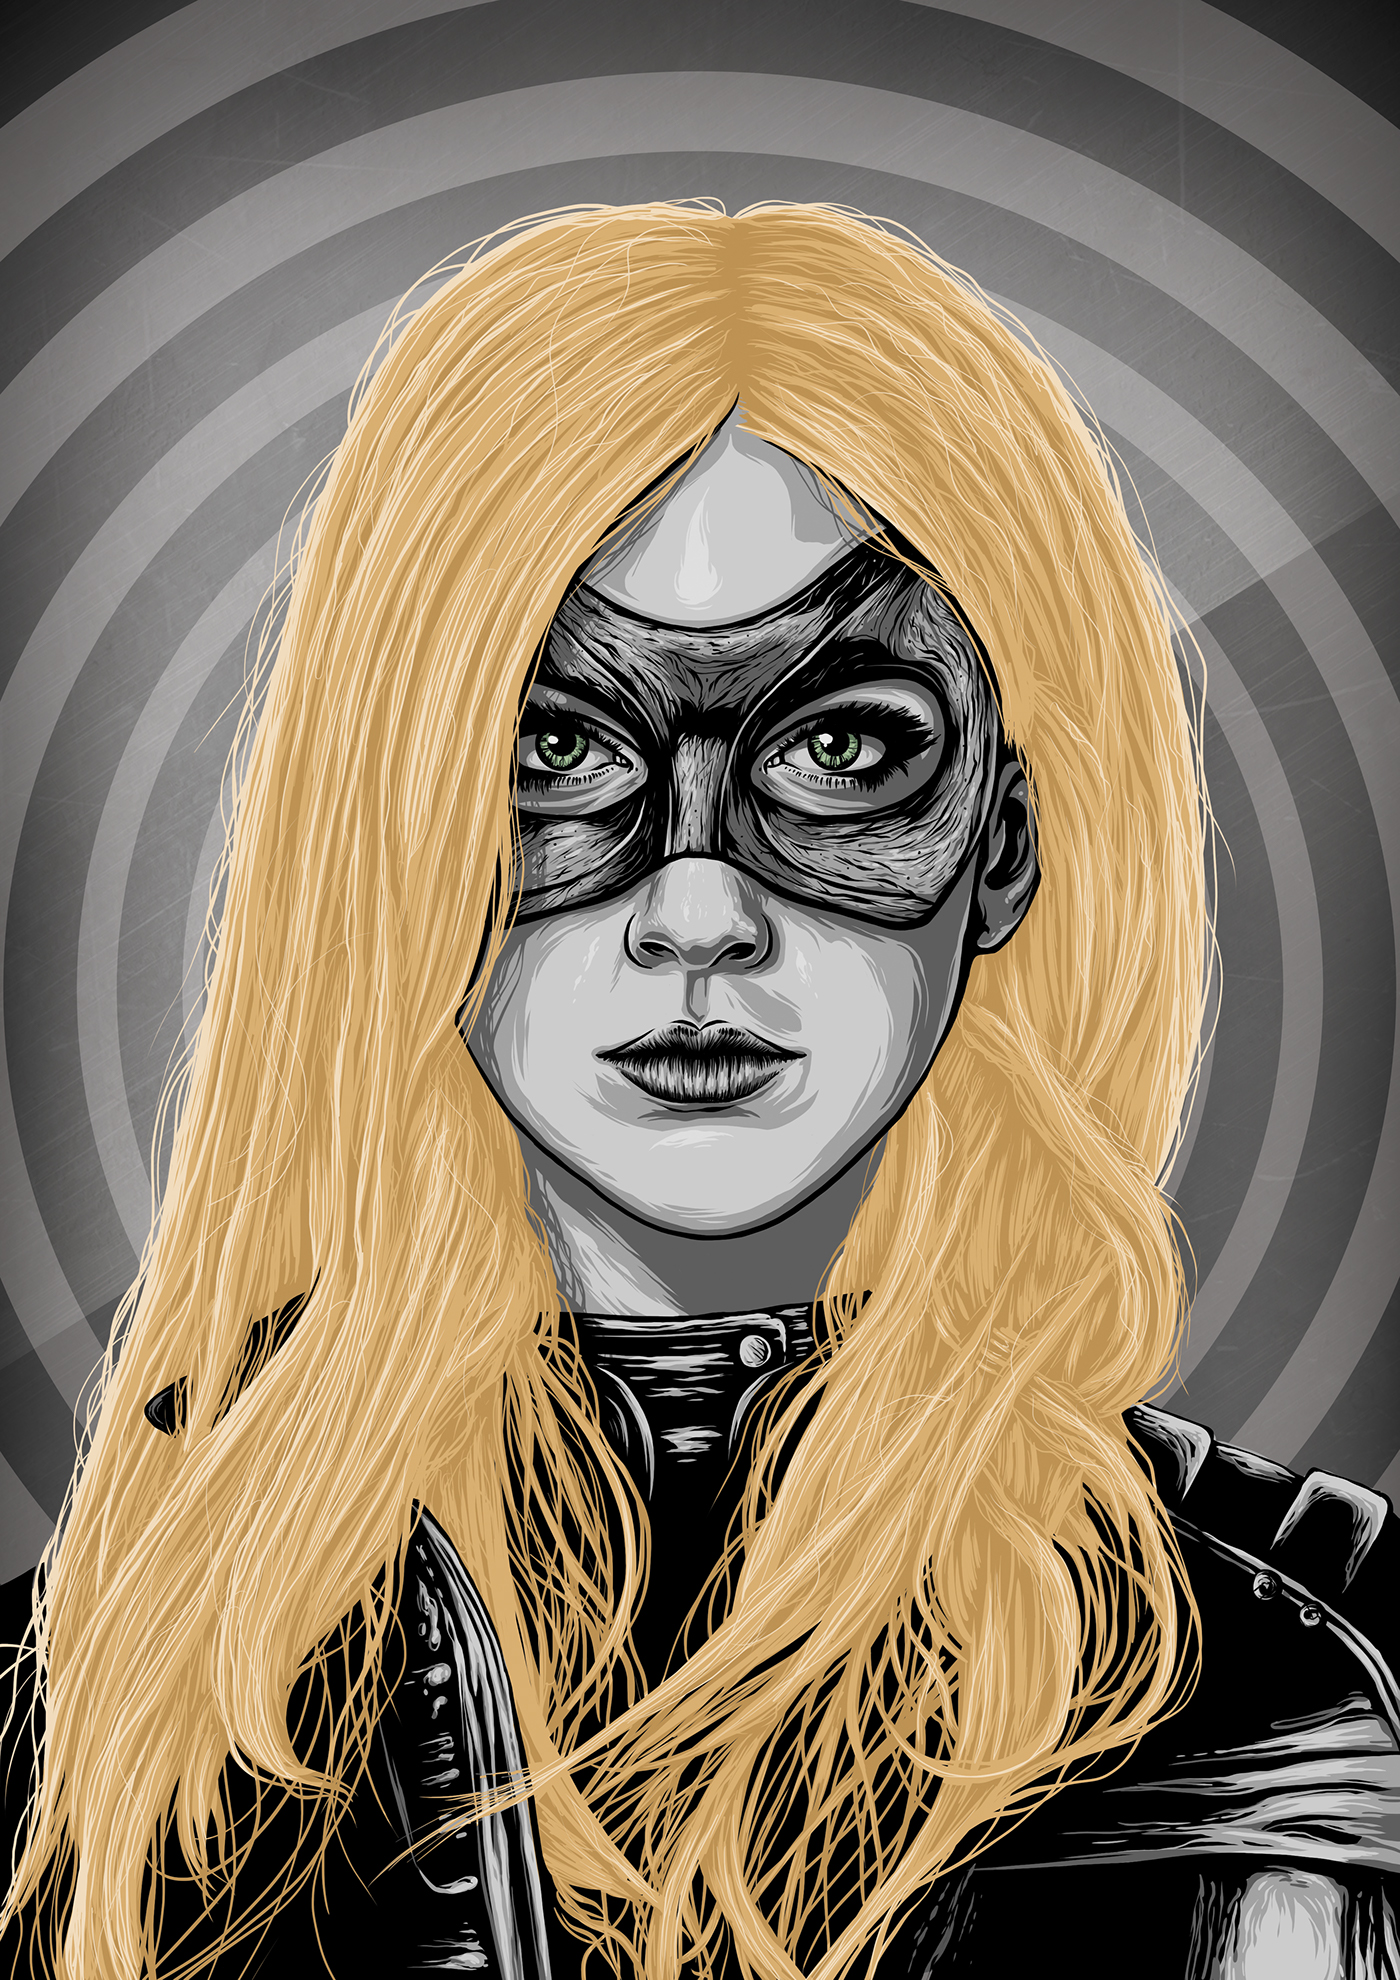 portrait arrow Super Hero black canary mask blonde woman leather hair